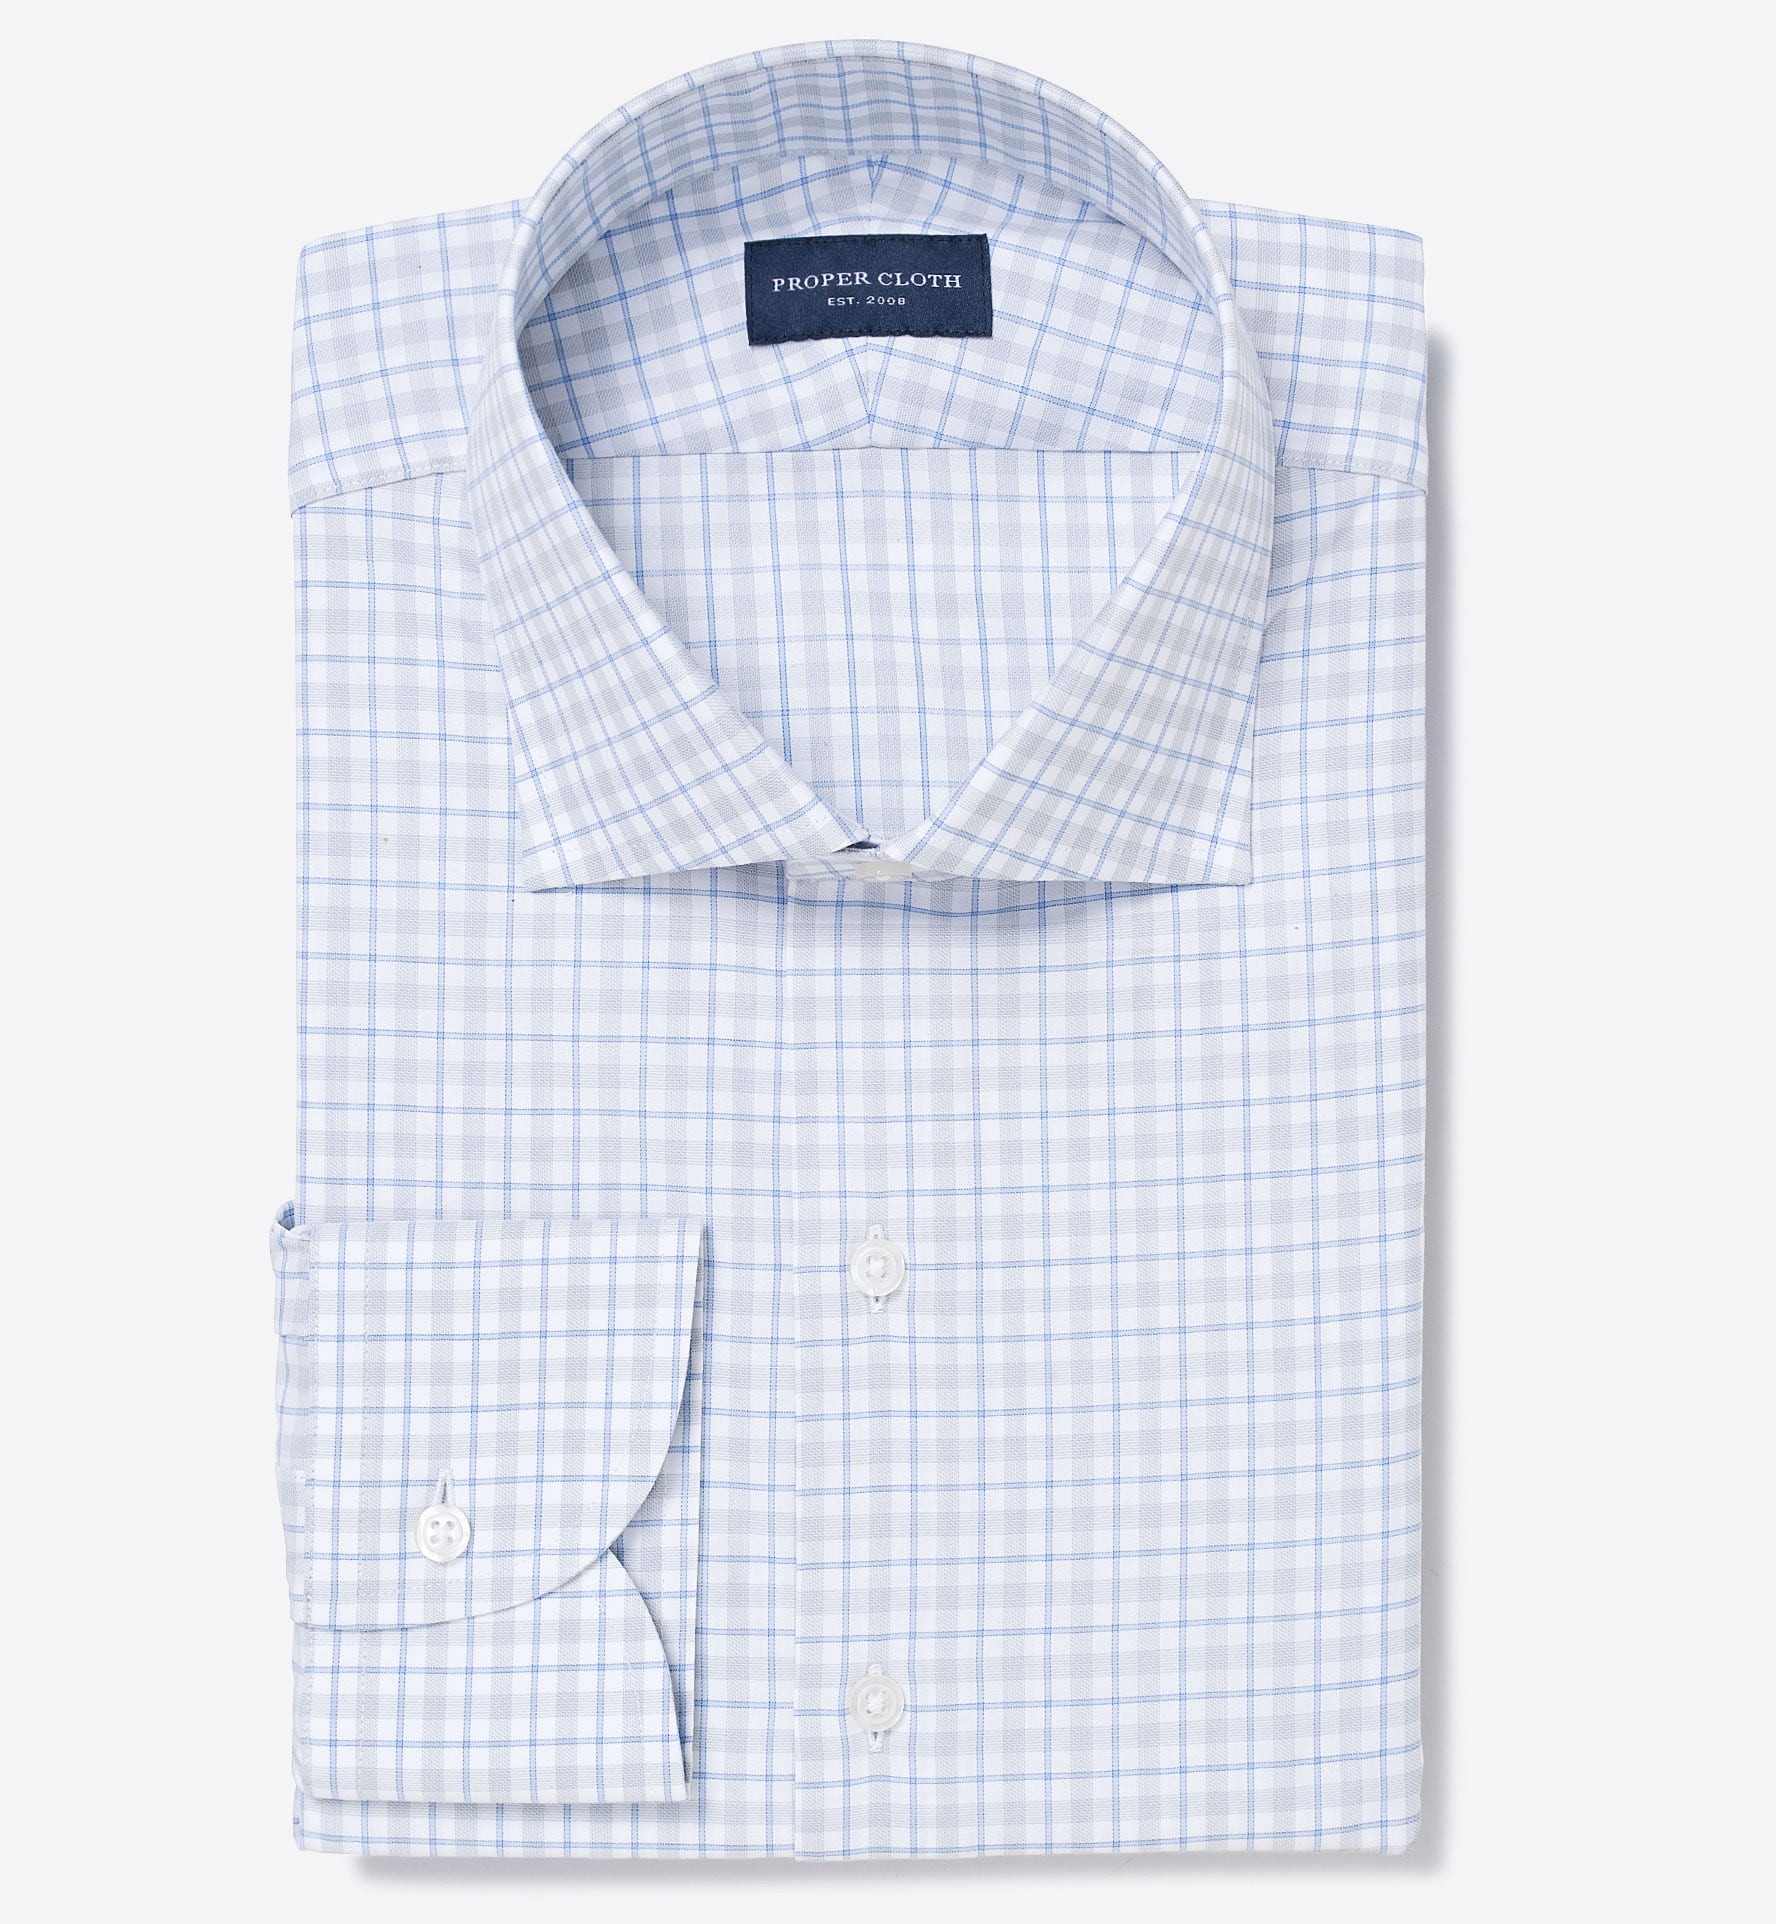 Novara Light Grey and Light Blue Multi Check Fitted Shirt by Proper Cloth